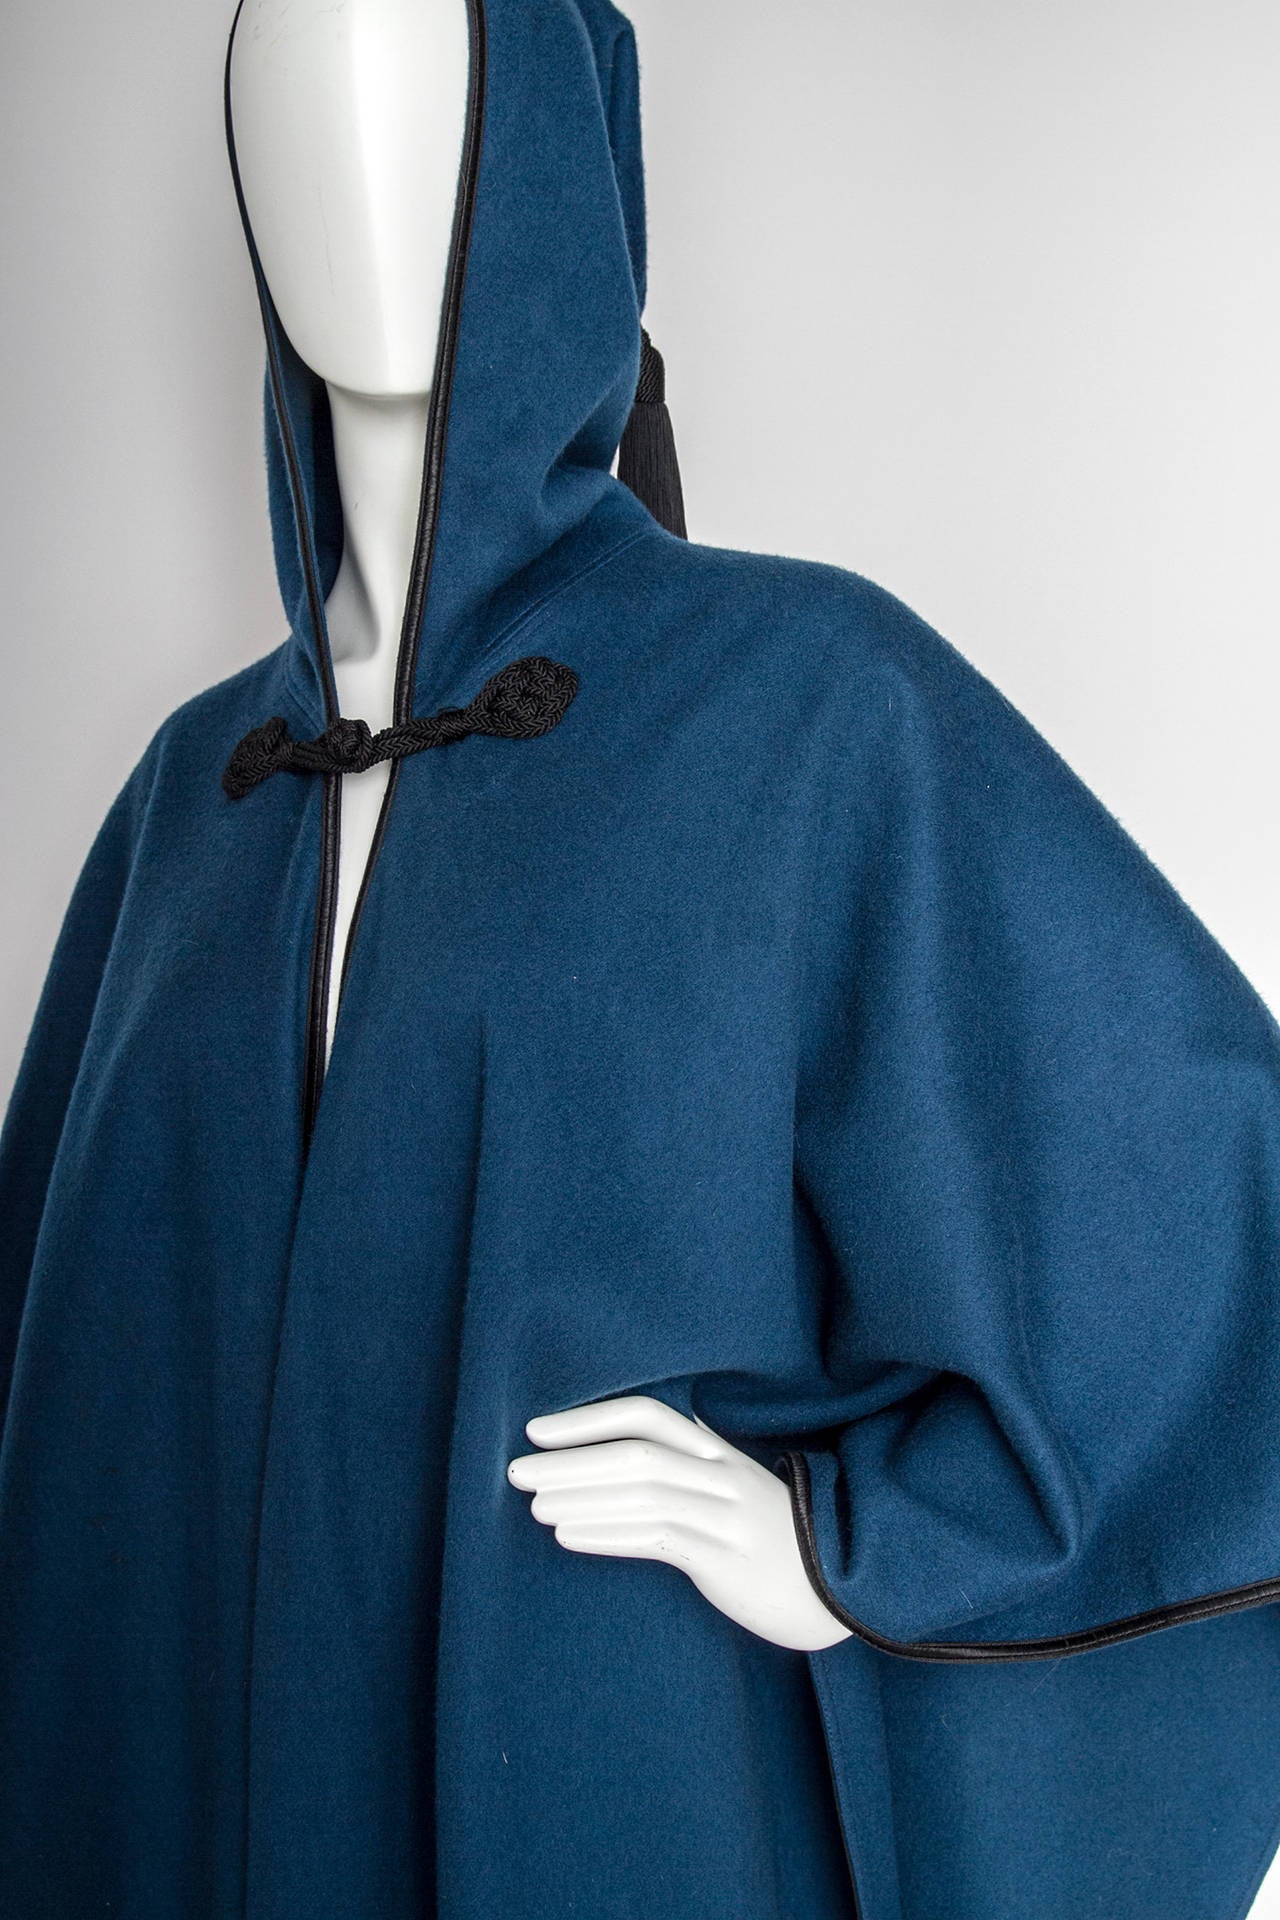 1970s Yves Saint Laurent Rive Gauche Teal Blue Wool Cape 1